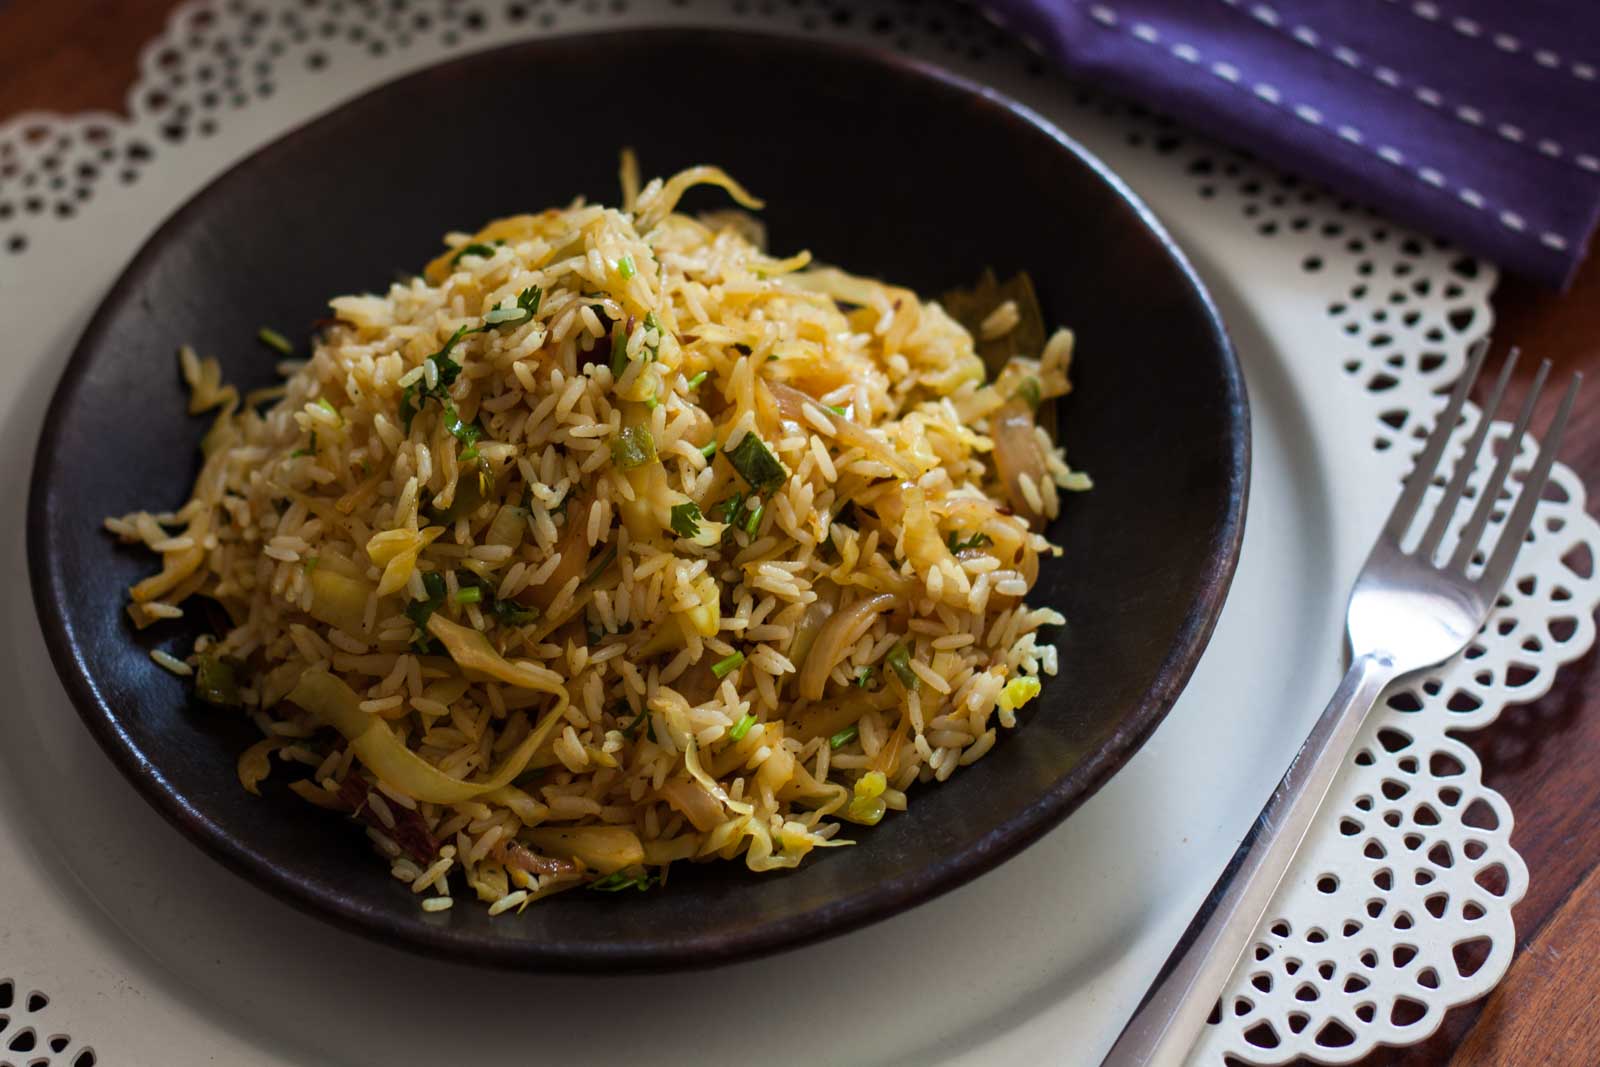 पत्ता गोभी पुलाव रेसिपी - Spiced Cabbage Rice (Recipe In Hindi)